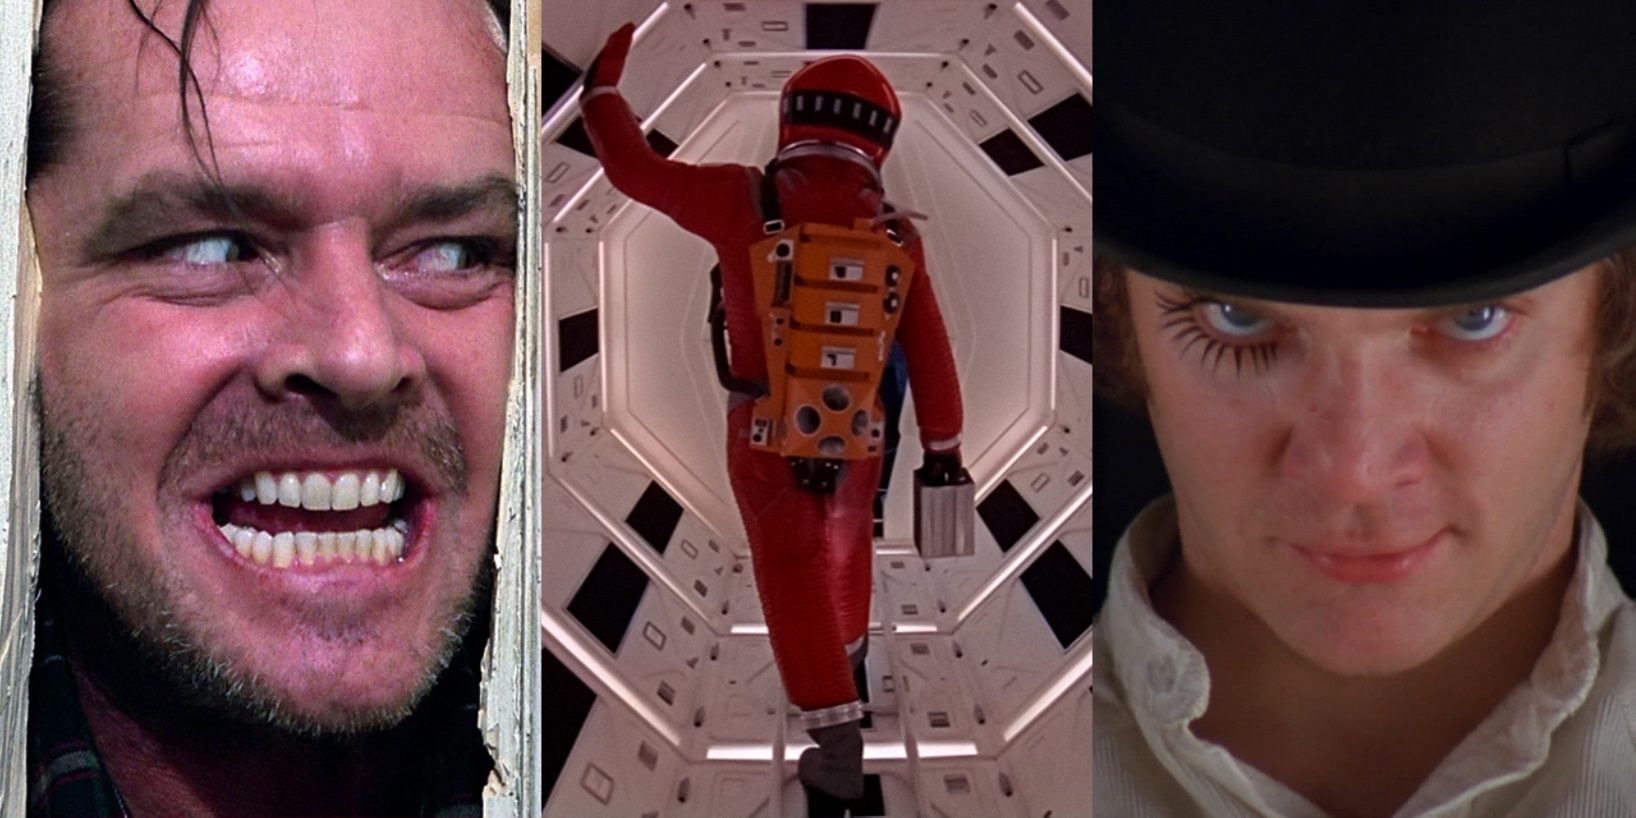 Split image of Jack in The Shining, Dave in 2001, and Alex in A Clockwork Orange